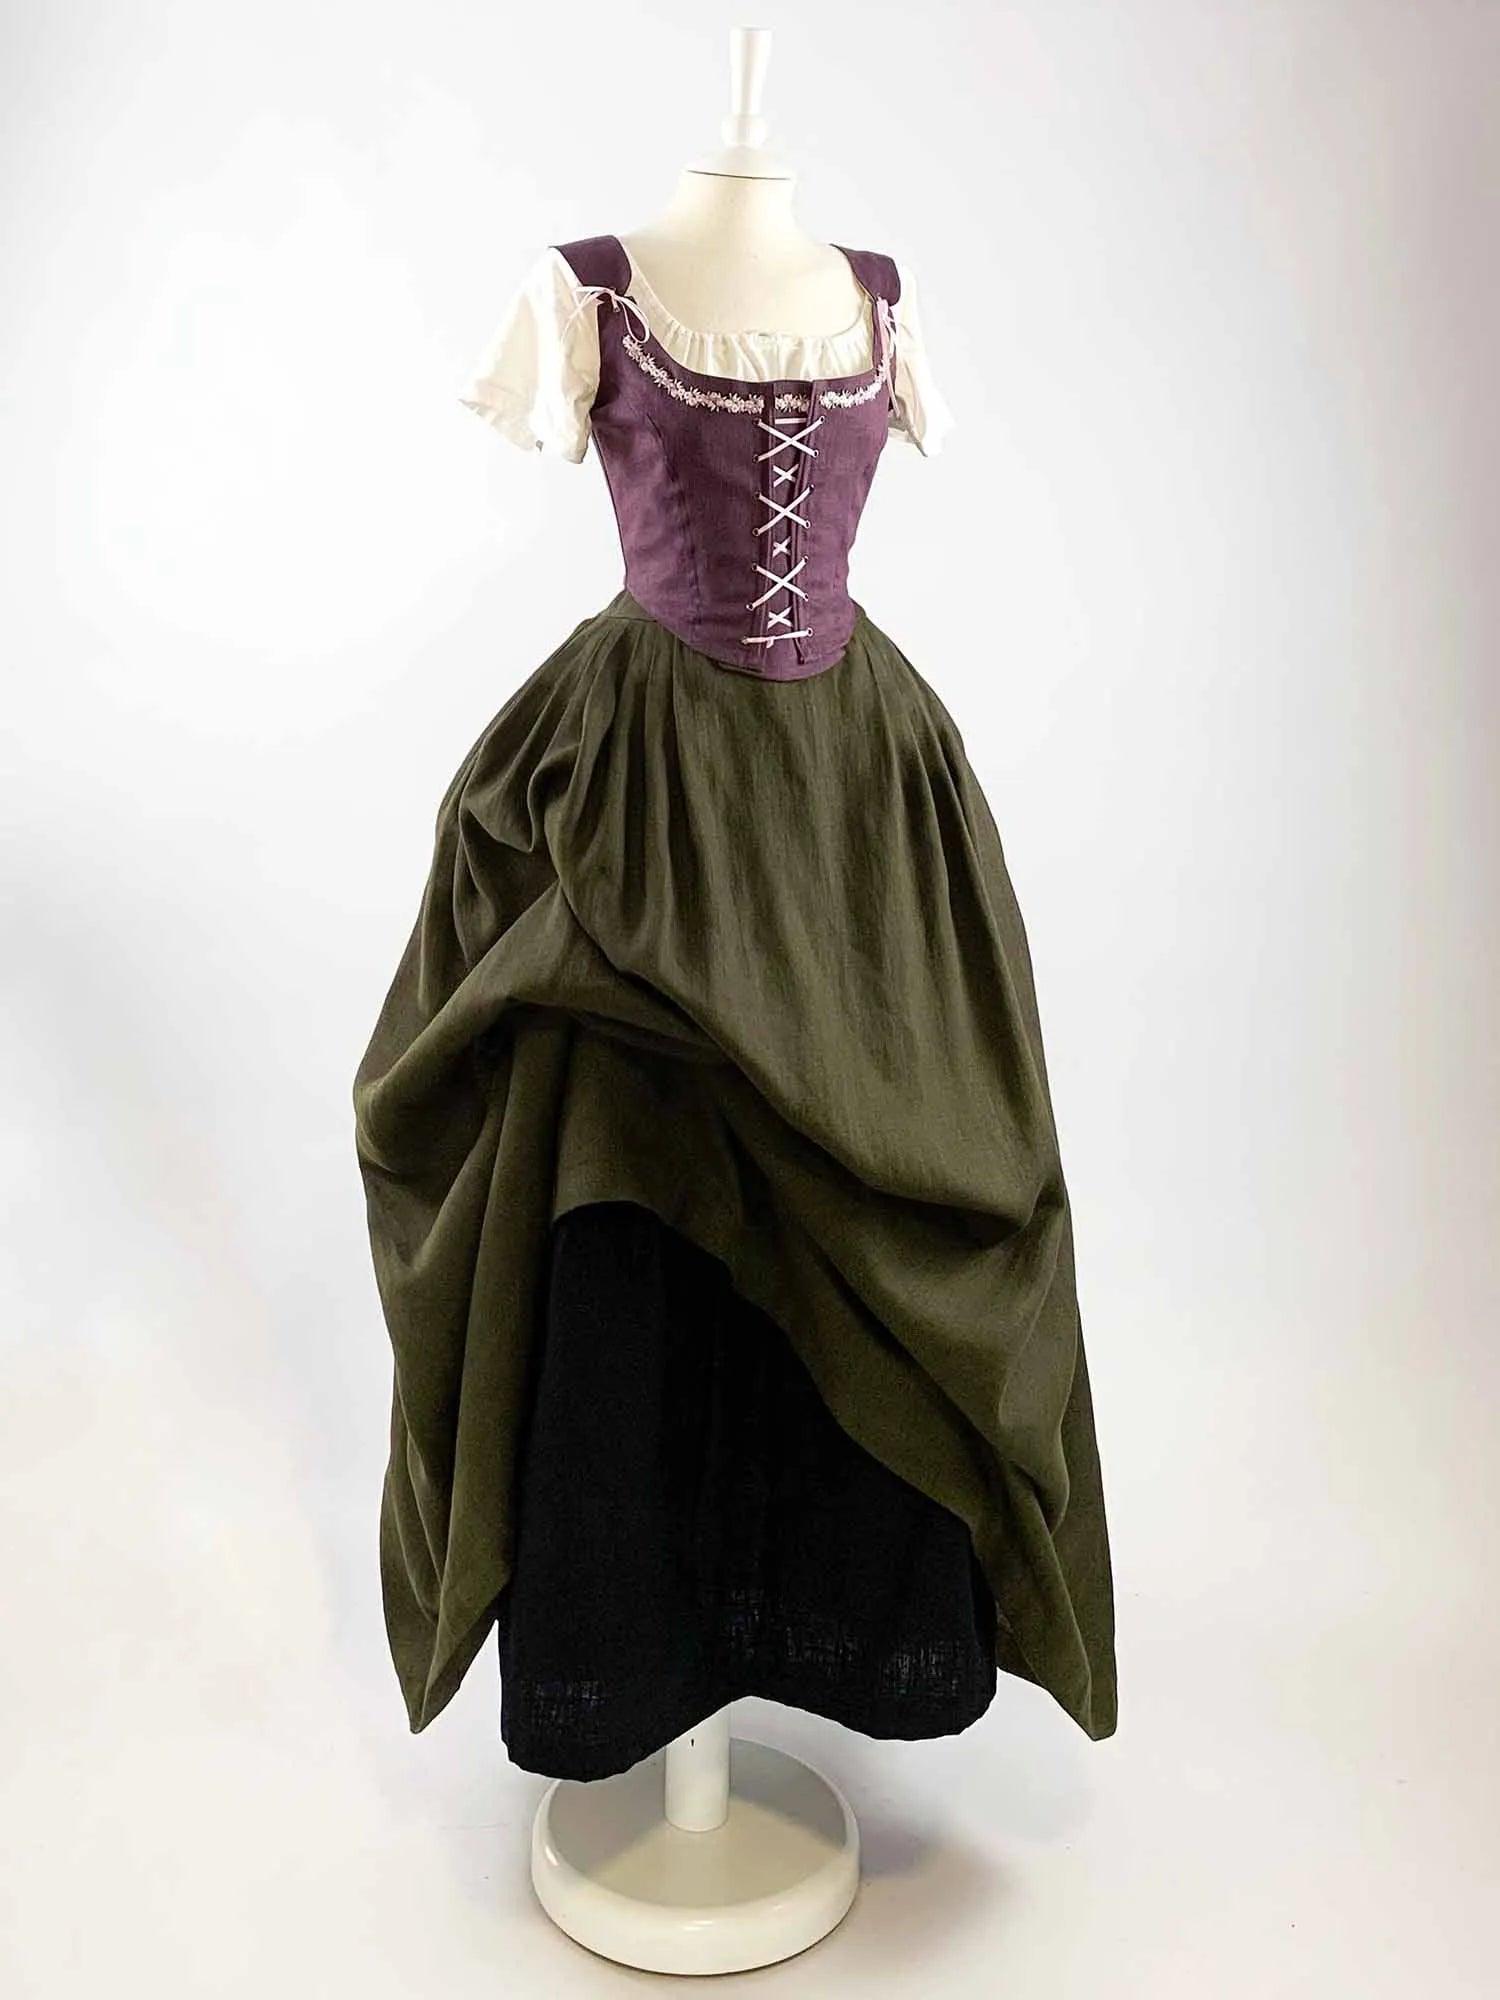 ISOLDE, Renaissance Costume in Purple &amp; Moss Green Linen - Atelier Serraspina - Costume Renaissance en Lin violet et vert mousse